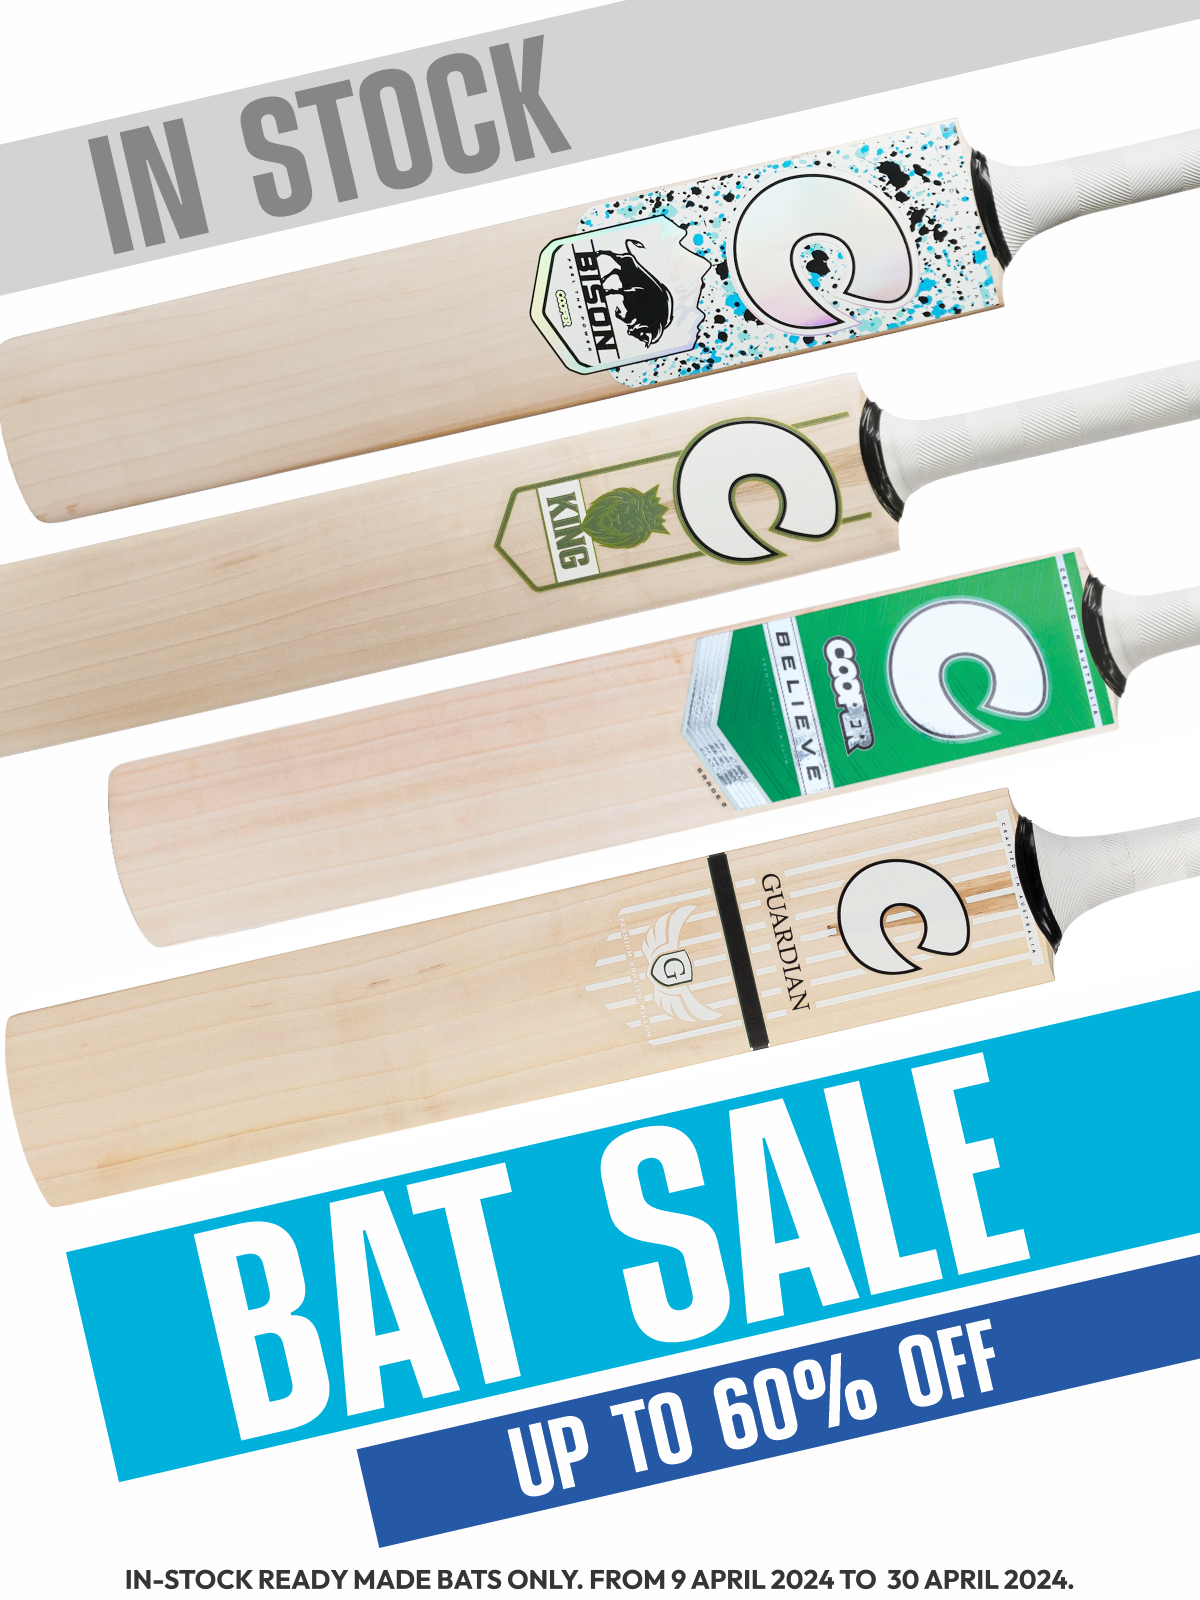 Cooper Cricket in-stock bat sale upto 60% off!